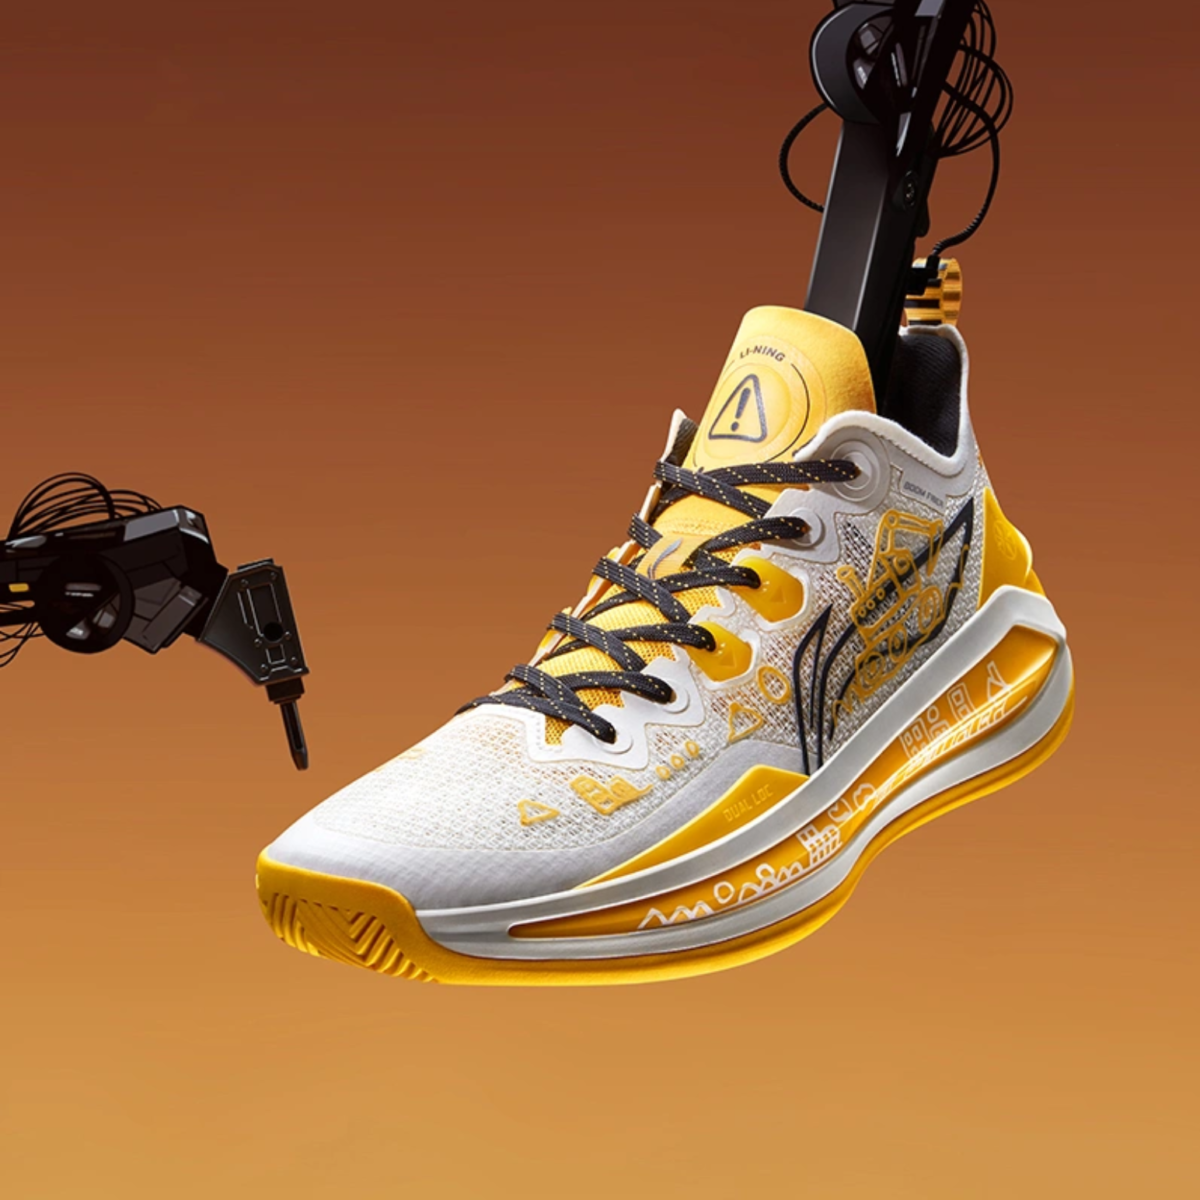 Li-Ning LiRen3 V2 Low Top “Dream” Premium Boom Basketball Shoes For Men ...